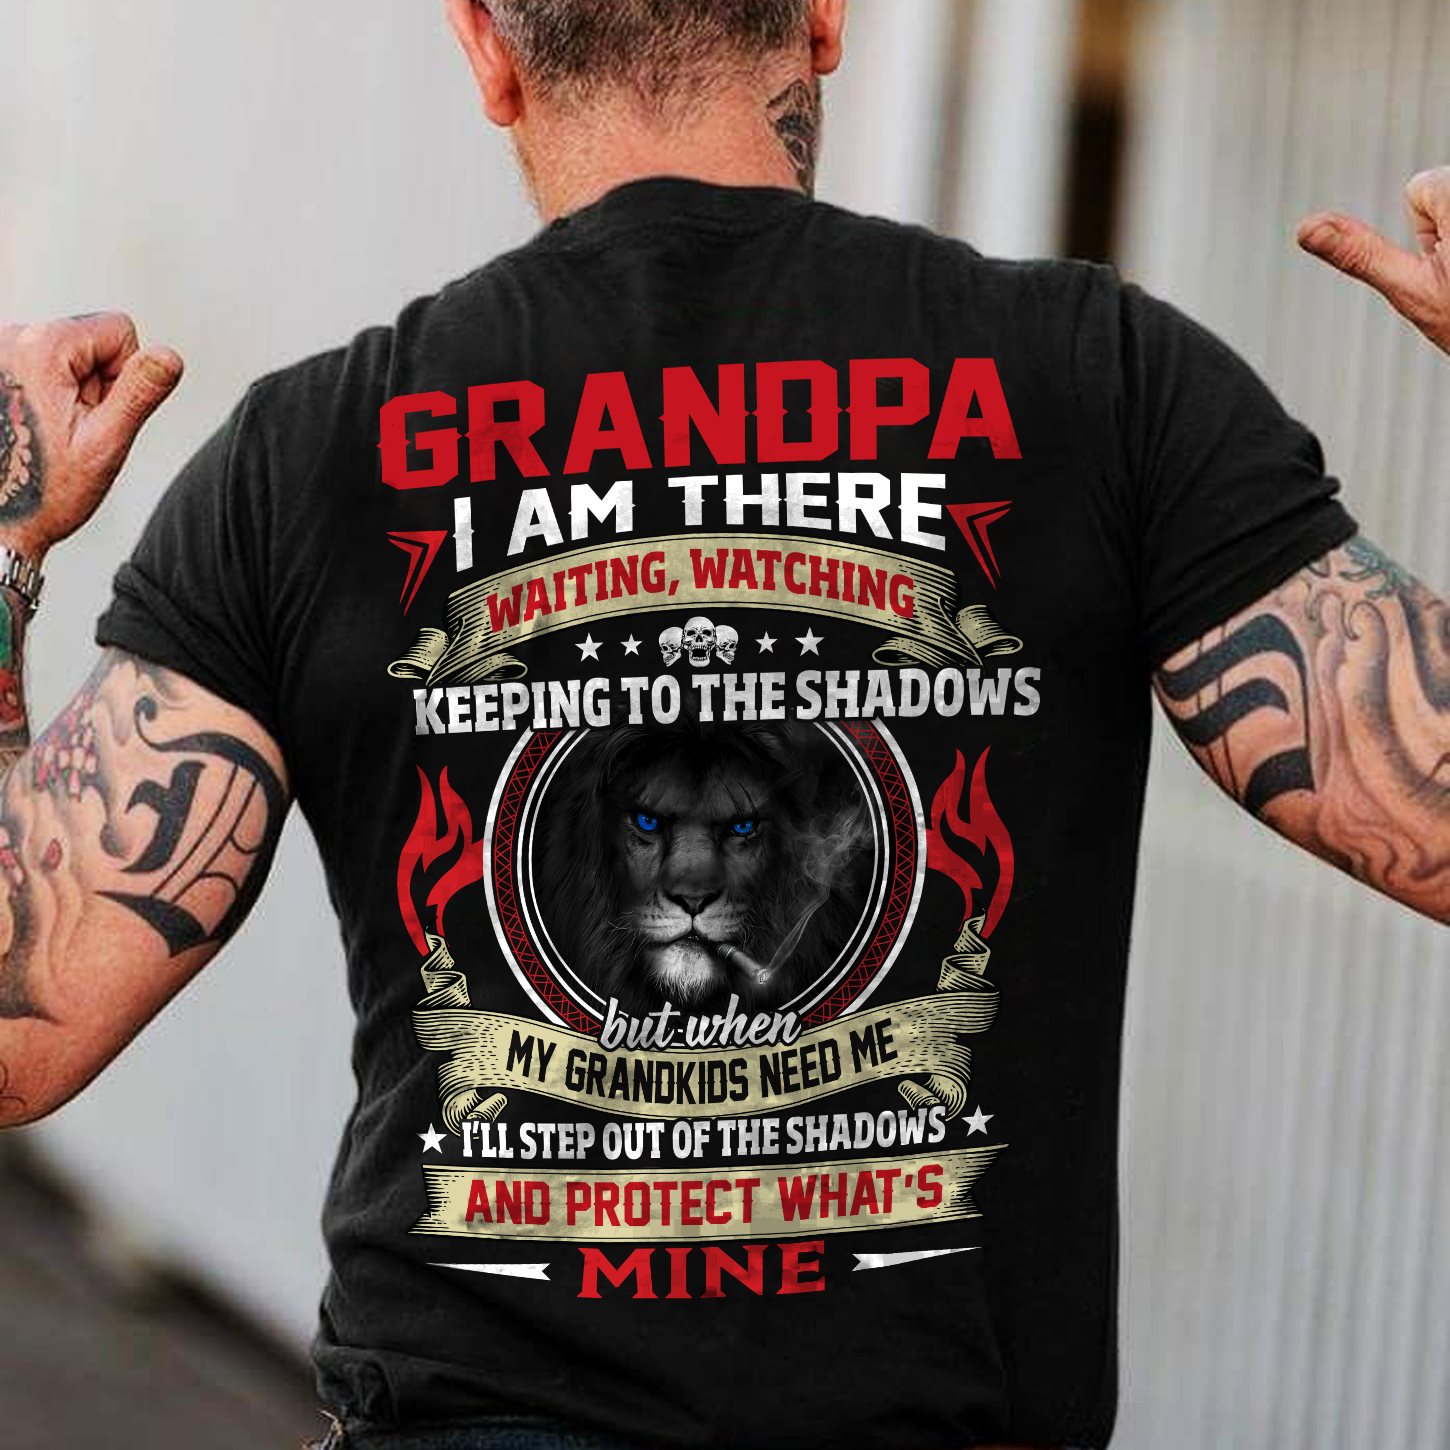 Grandpa I am there waiting, watching keeping to the shadows - Lion grandpa, lion smoker